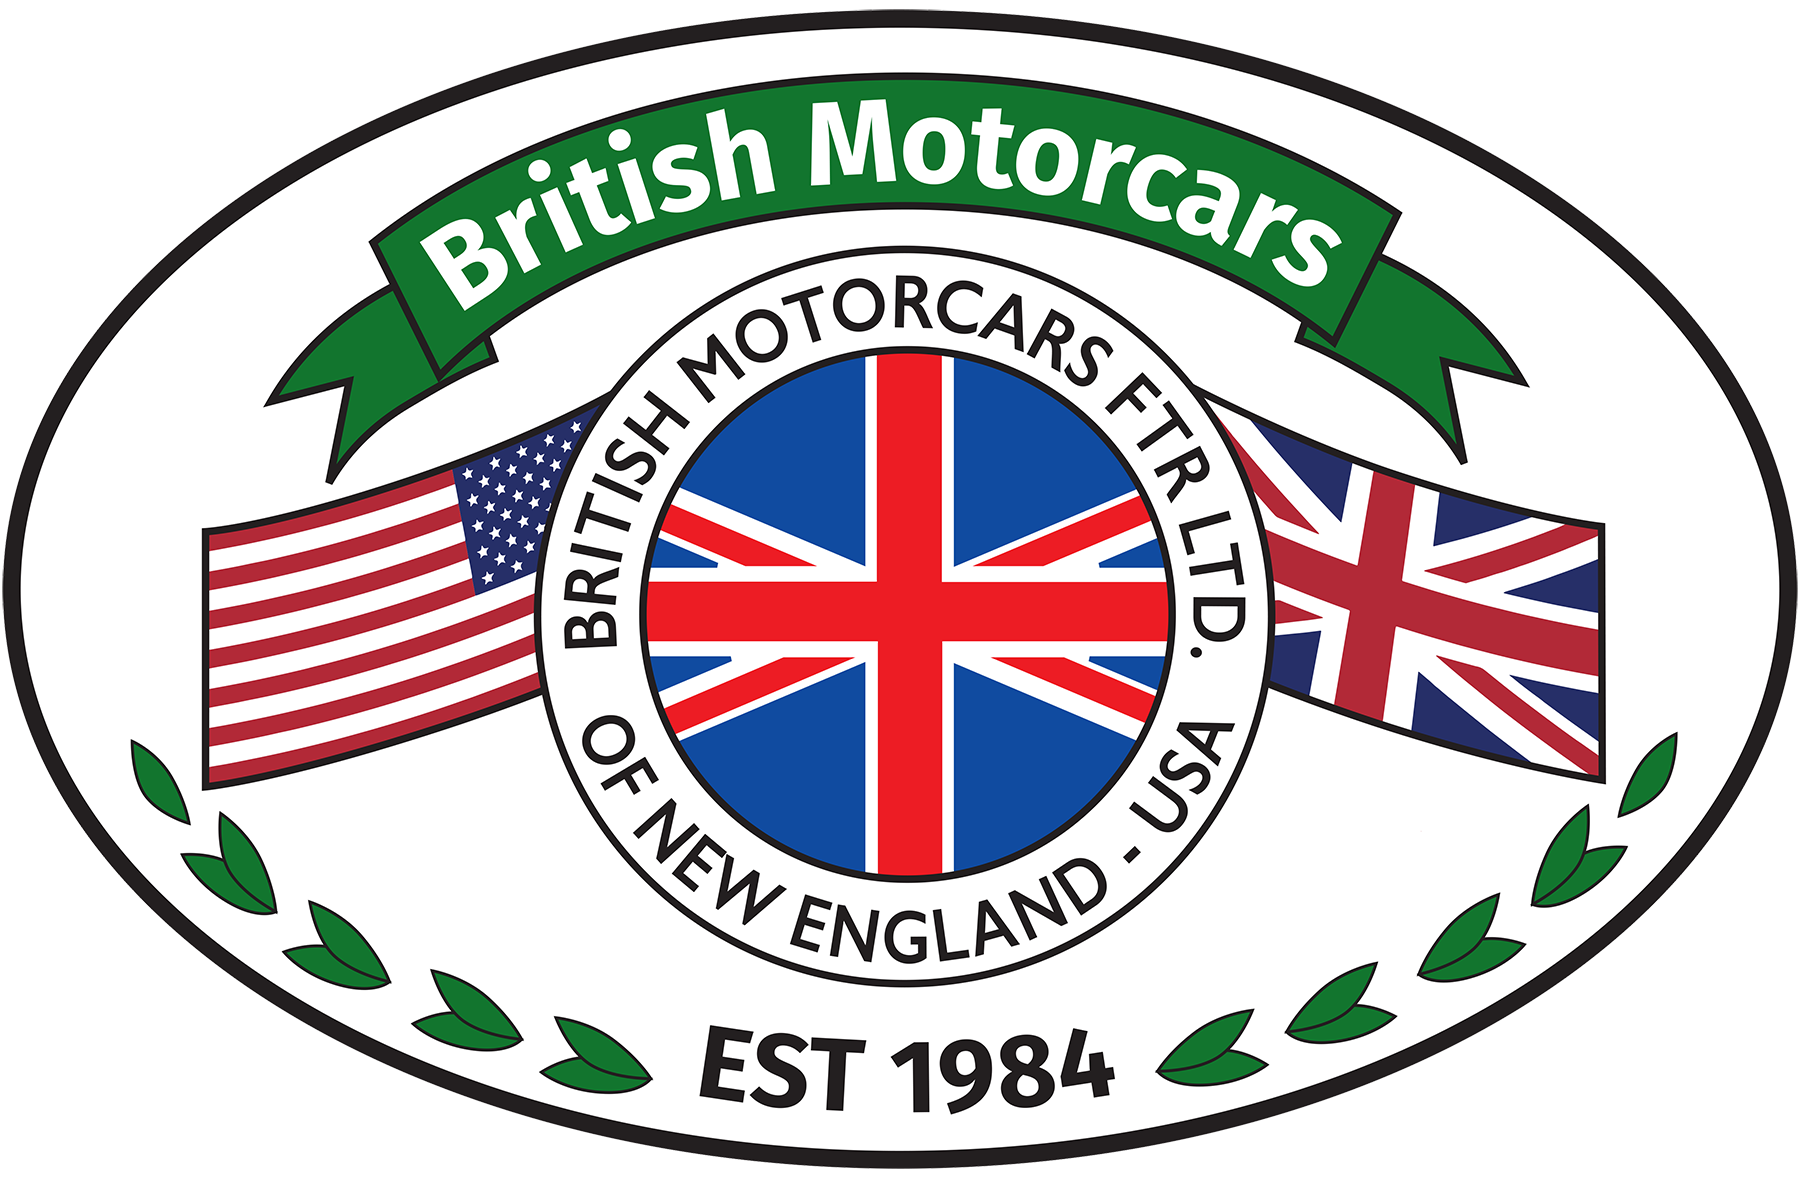 British Motorcars of New England